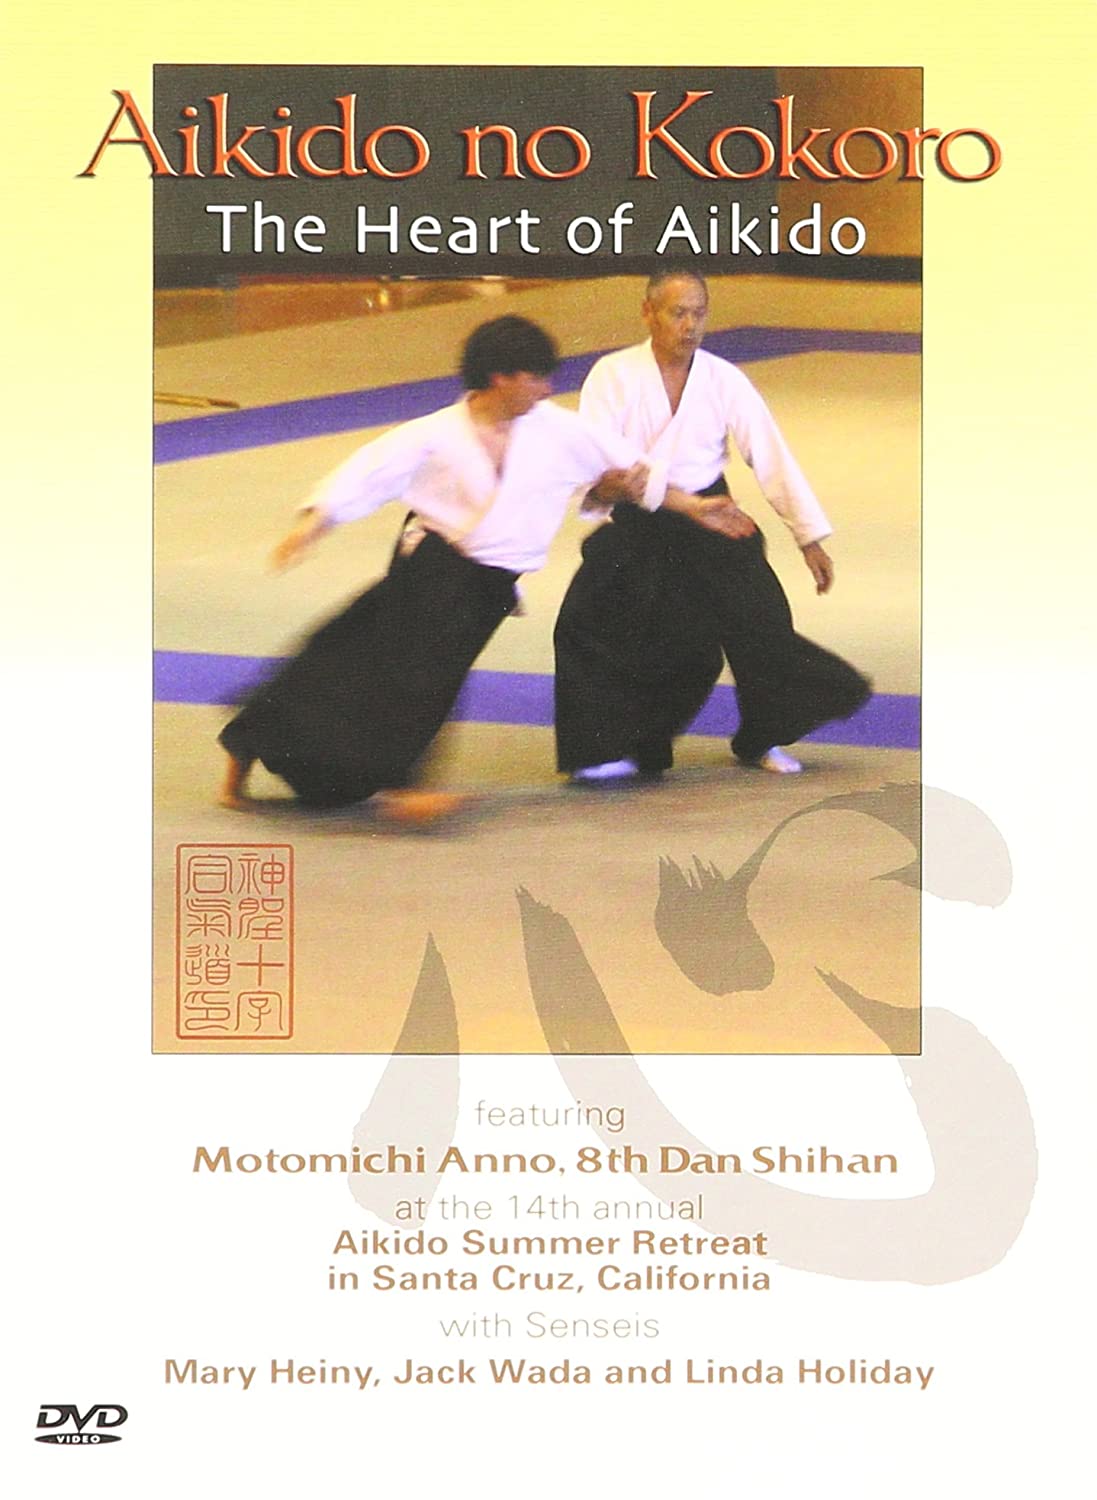 Aikido no Kokoro - The Heart of Aikido DVD with Motomichi Anno, Mary Heiny, Jack Wada & Linda Holiday - Budovideos